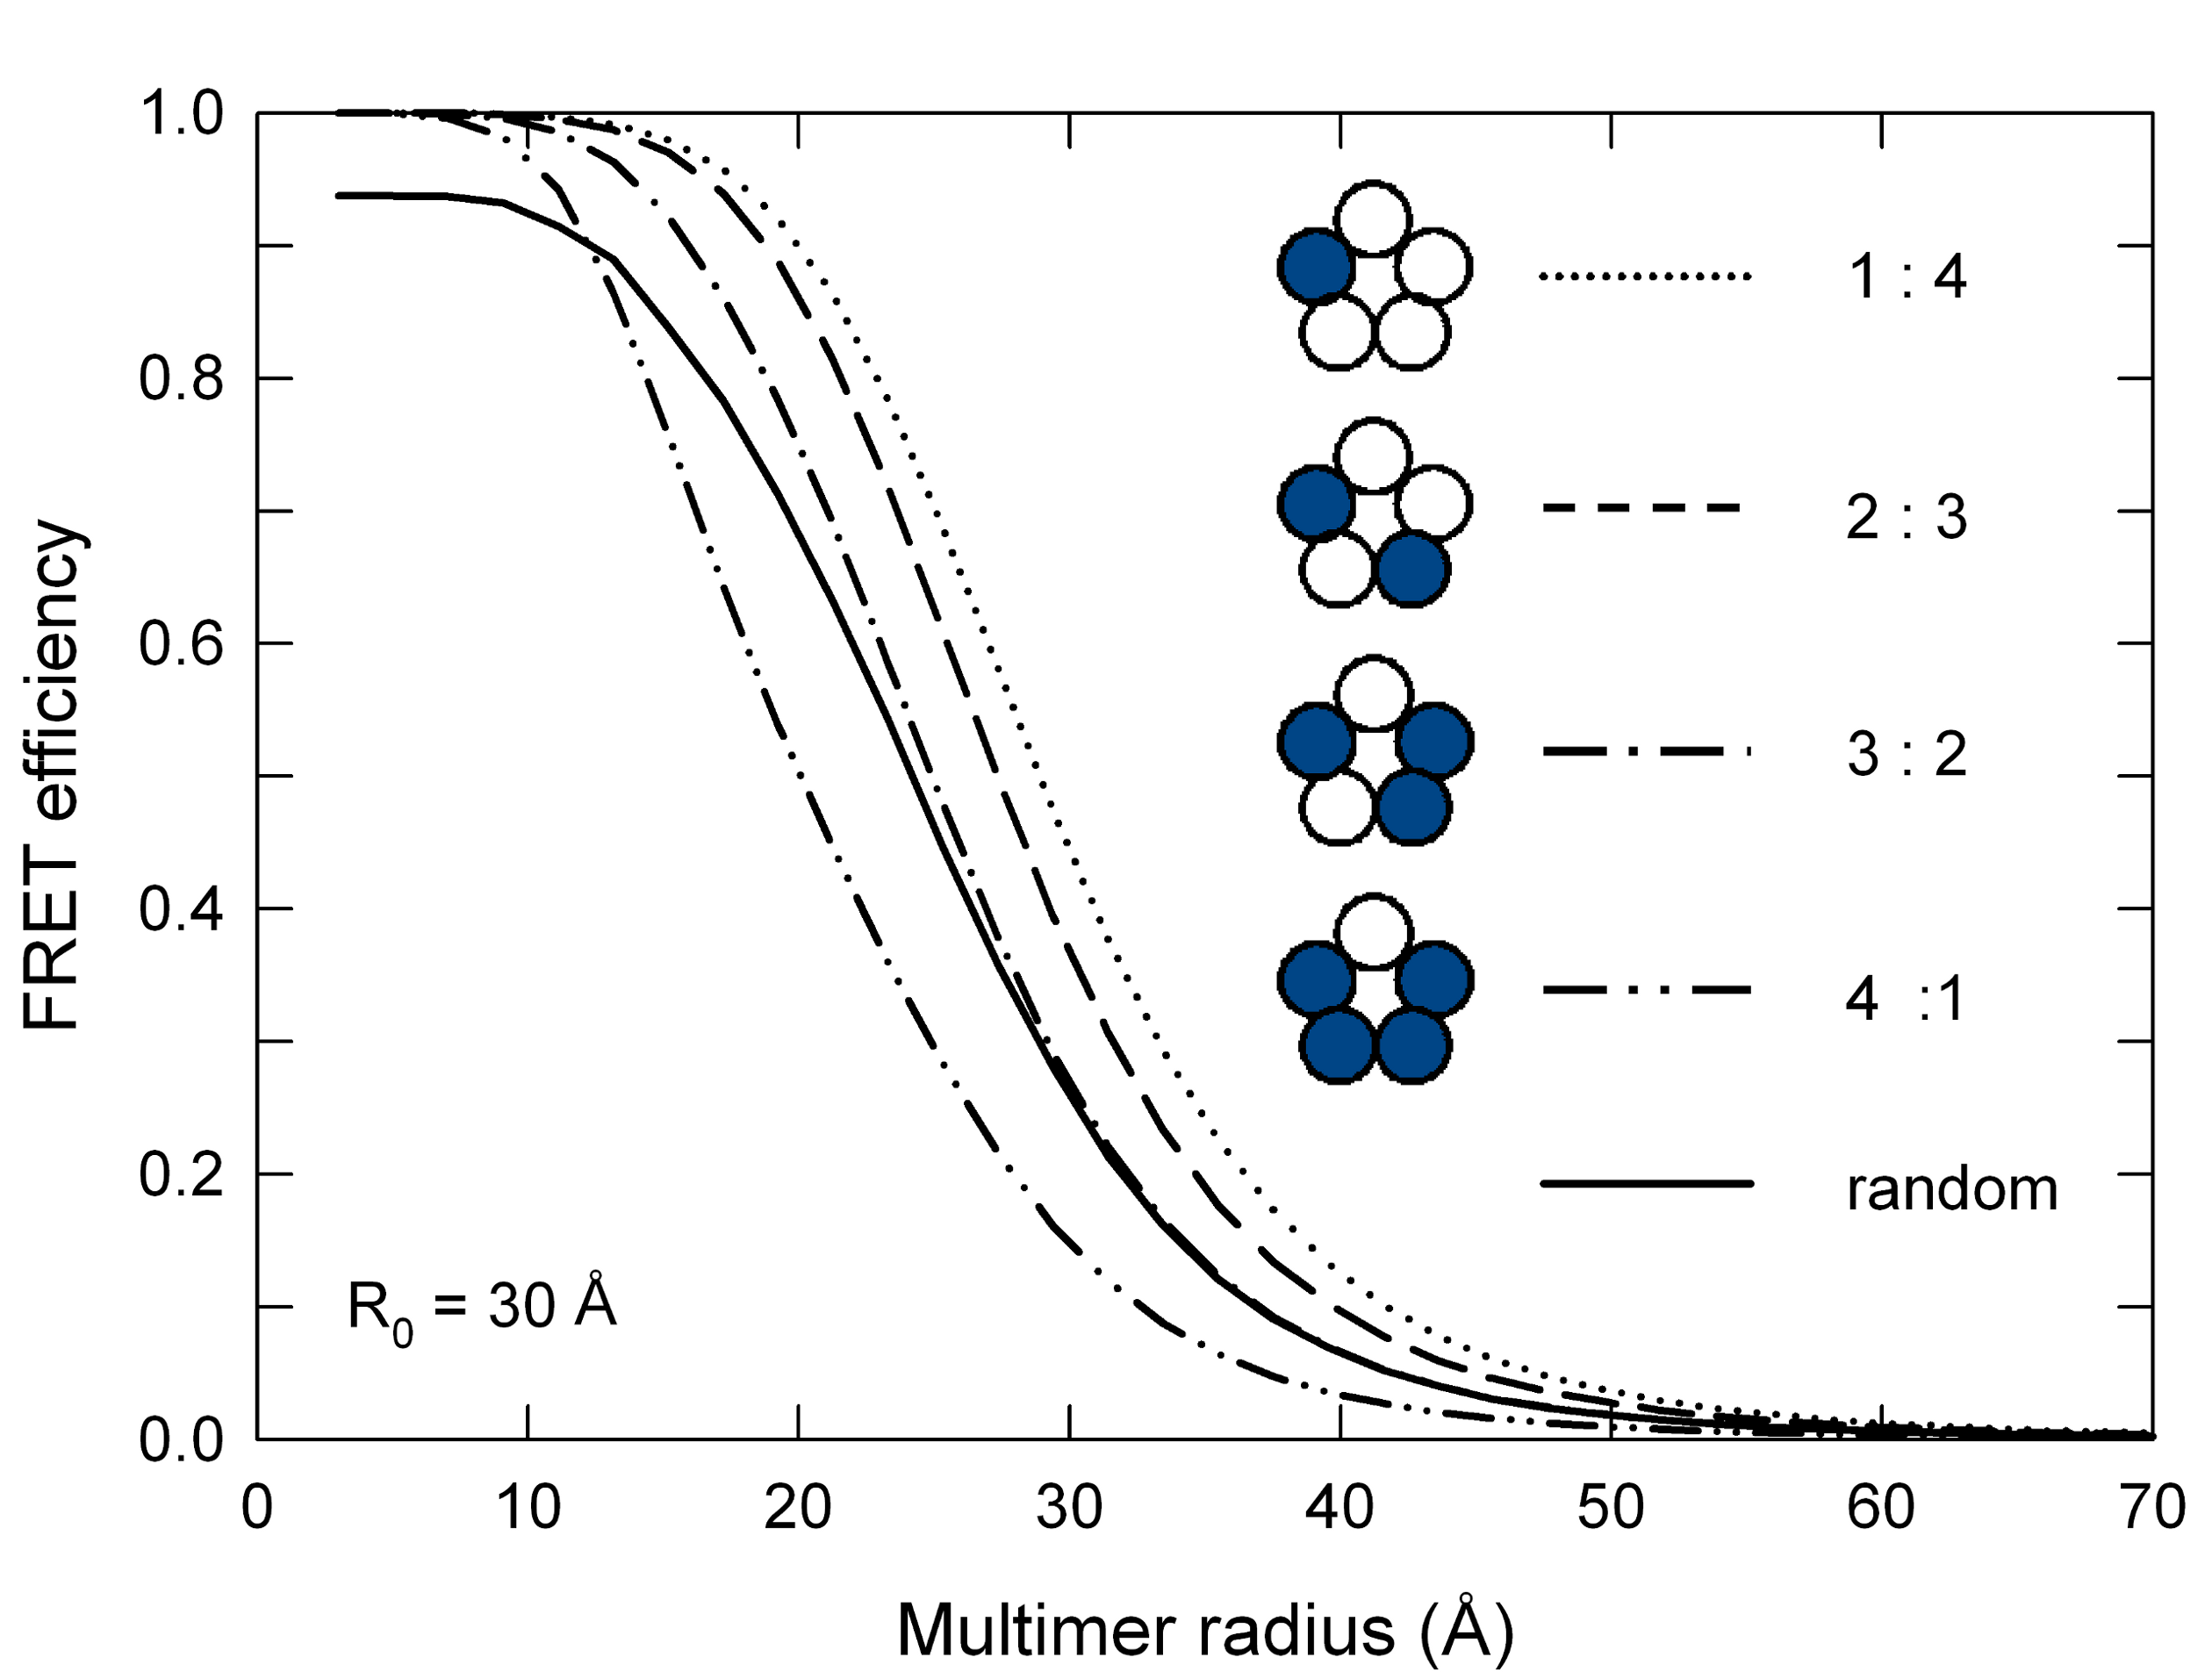 ExiFRET: FRET efficiency vs multimer radius for multimeric proteins